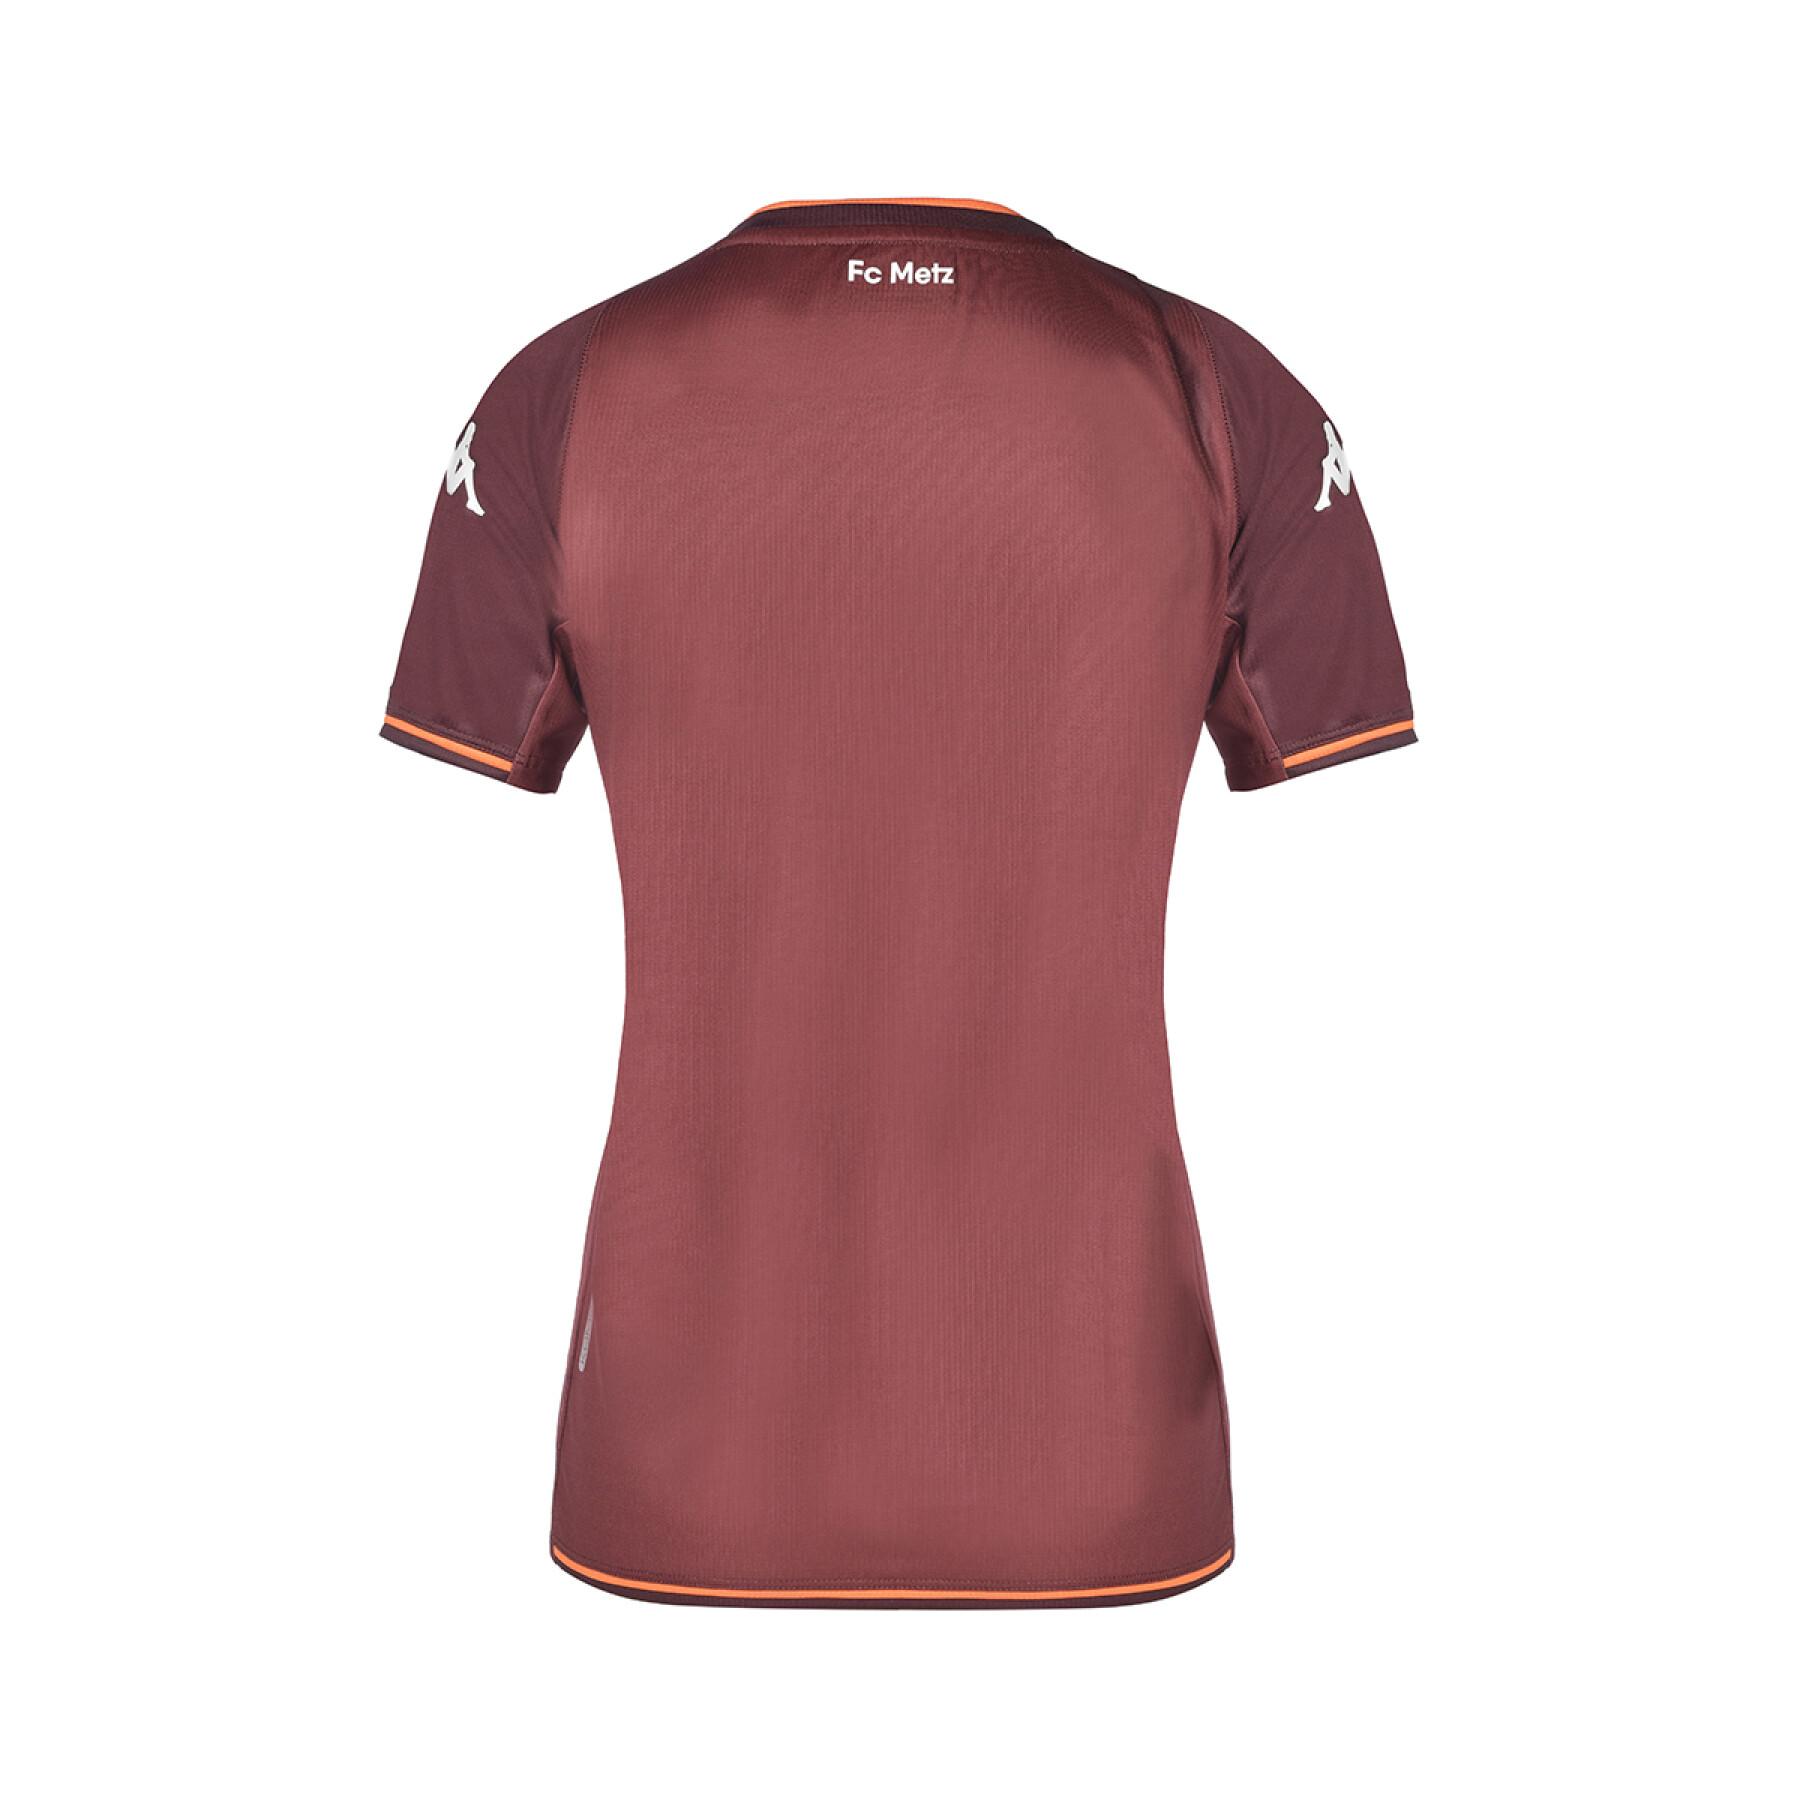 Women's home jersey FC Metz 2021/22